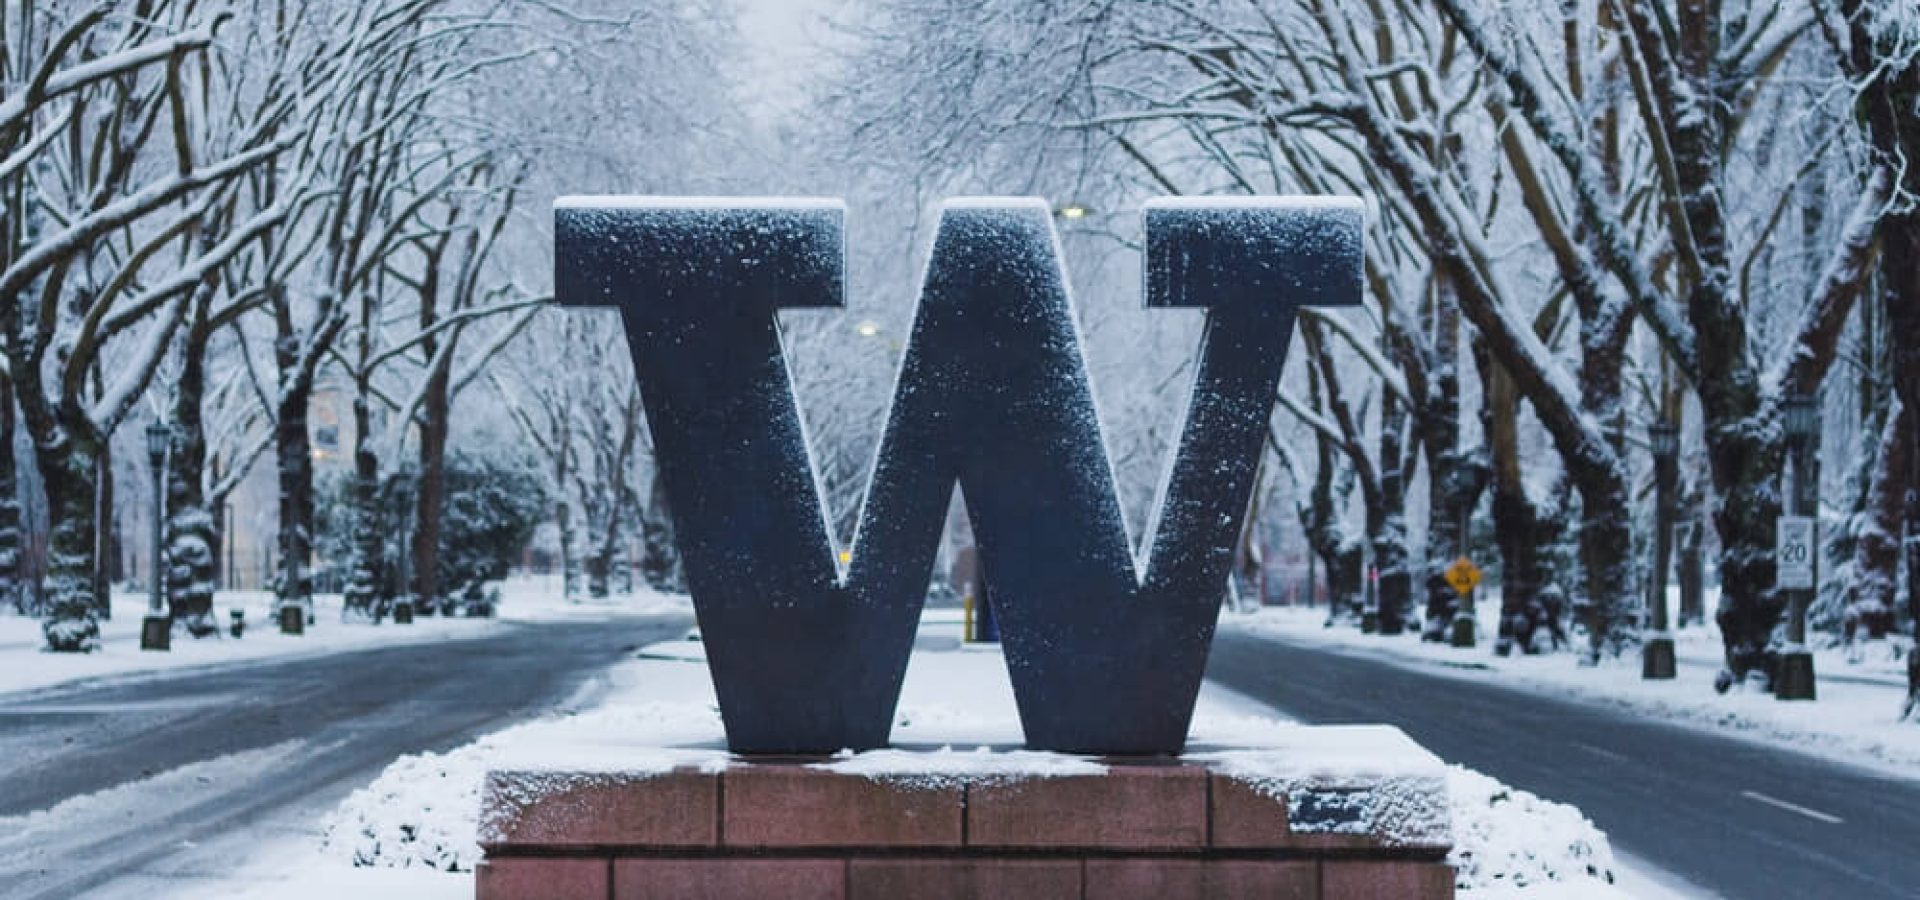 University of Washington welcome sign under snow.